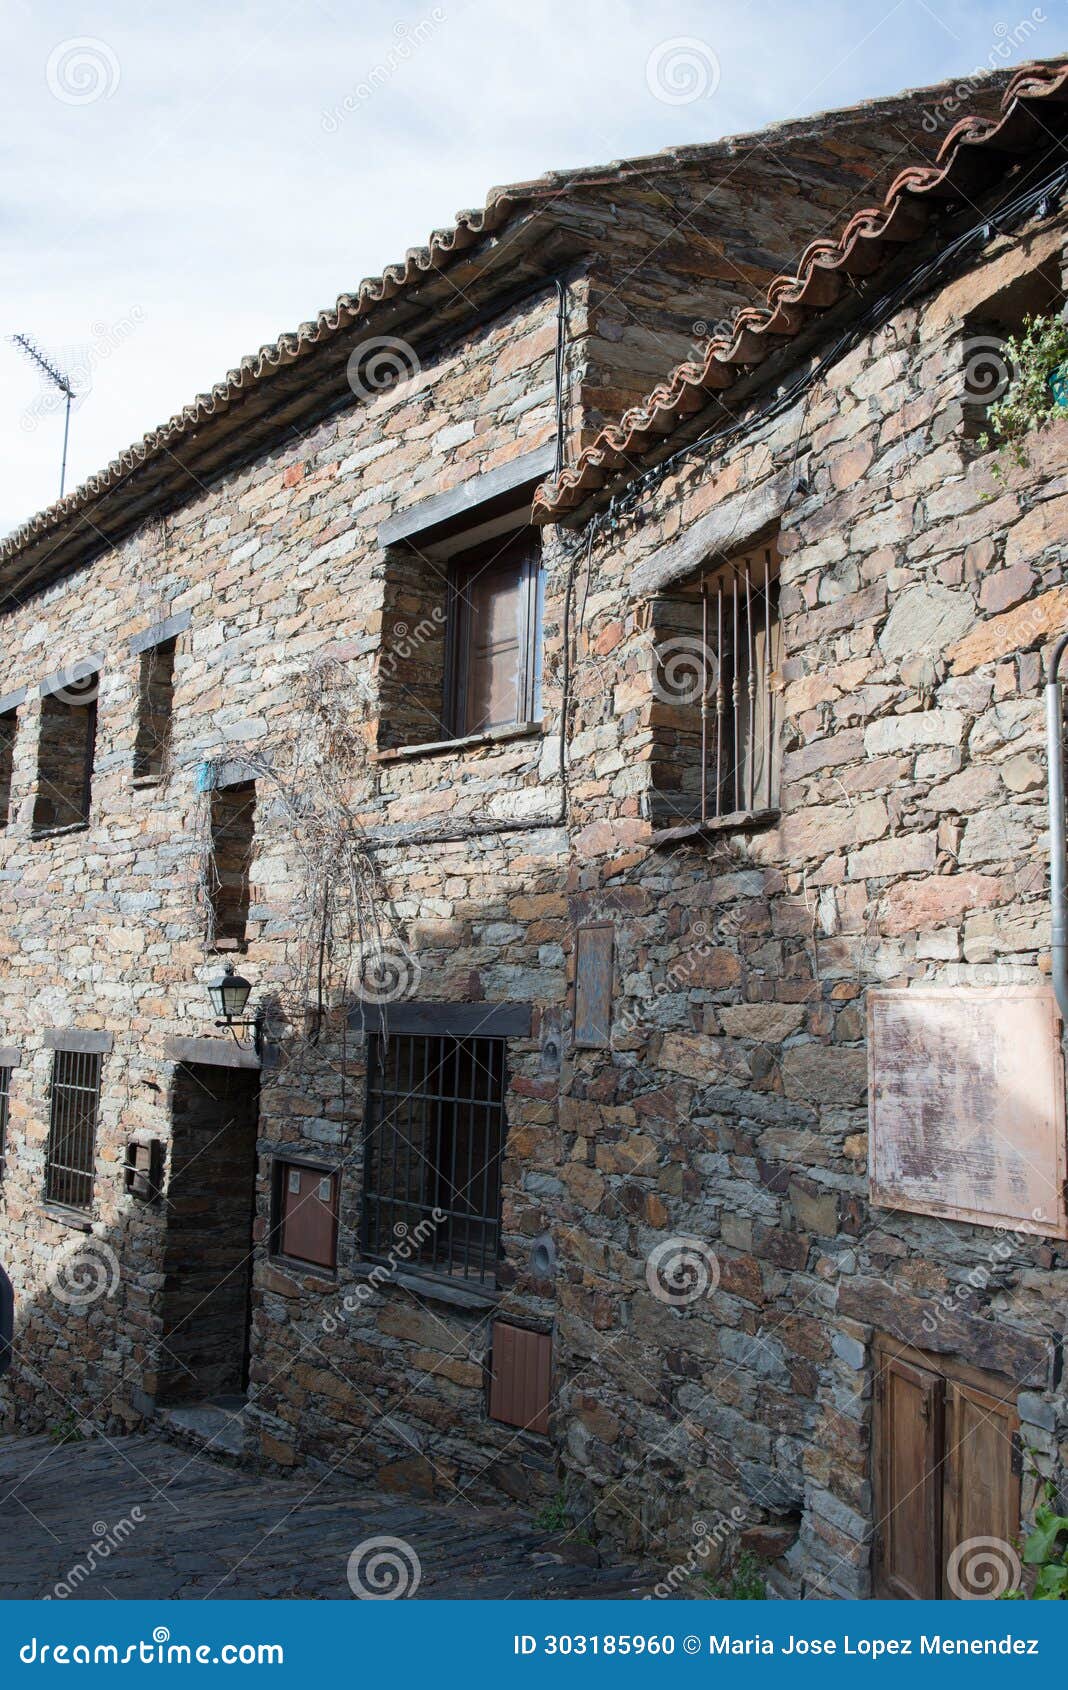 beautiful houses in patones de arriba, madrid. traditional stone walls